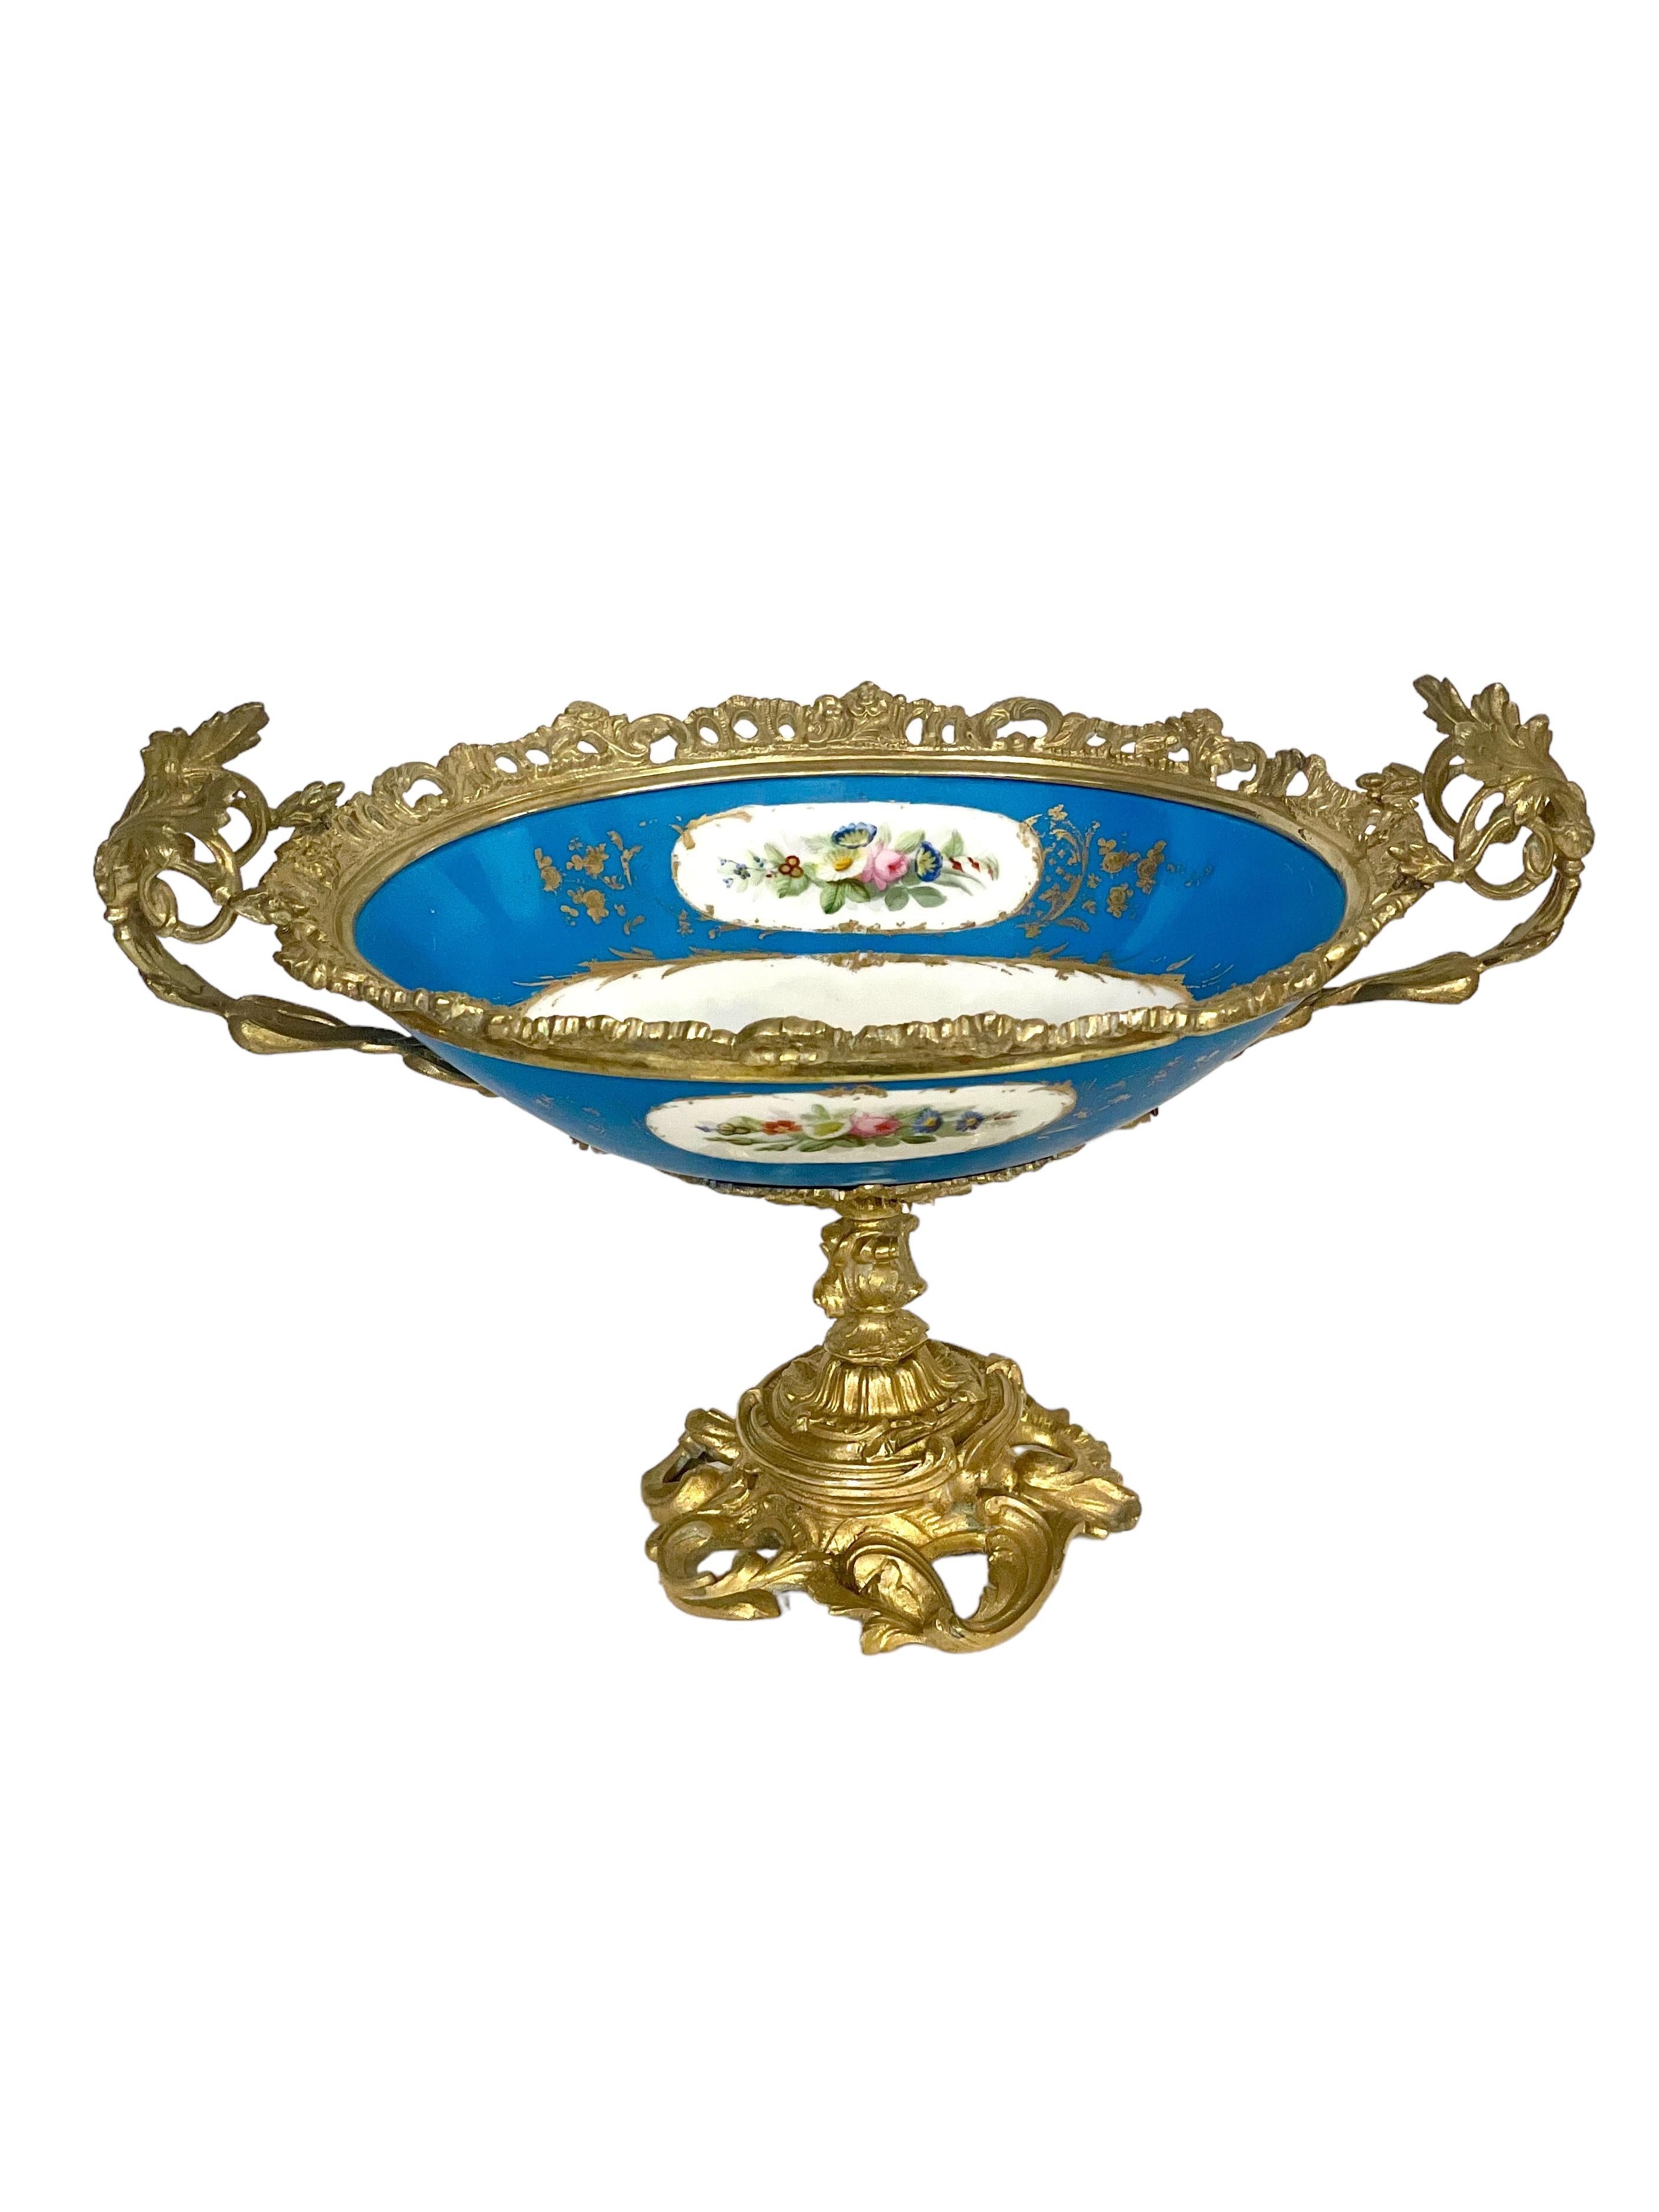 19th Century Napoleon III Sèvres Porcelain and Bronze Centerpiece For Sale 3